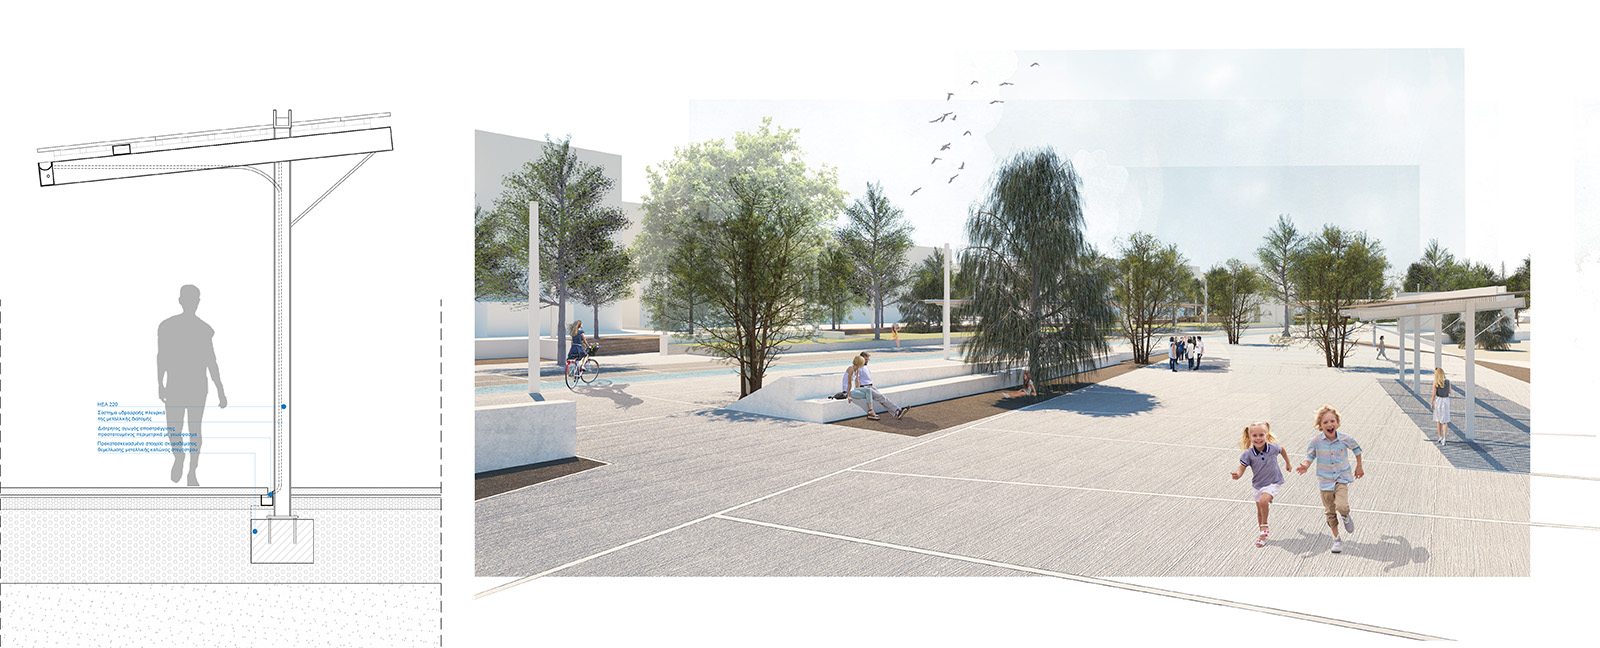 Archisearch Παρουσίαση των προτάσεων που απέσπασαν κατ’ισοβαθμίαν το Β’ Βραβείο στον Πανελλήνιο Ανοιχτό Αρχιτεκτονικό Διαγωνισμό για την “Ανάπλαση του Παραλιακού Μετώπου της Πάτρας”